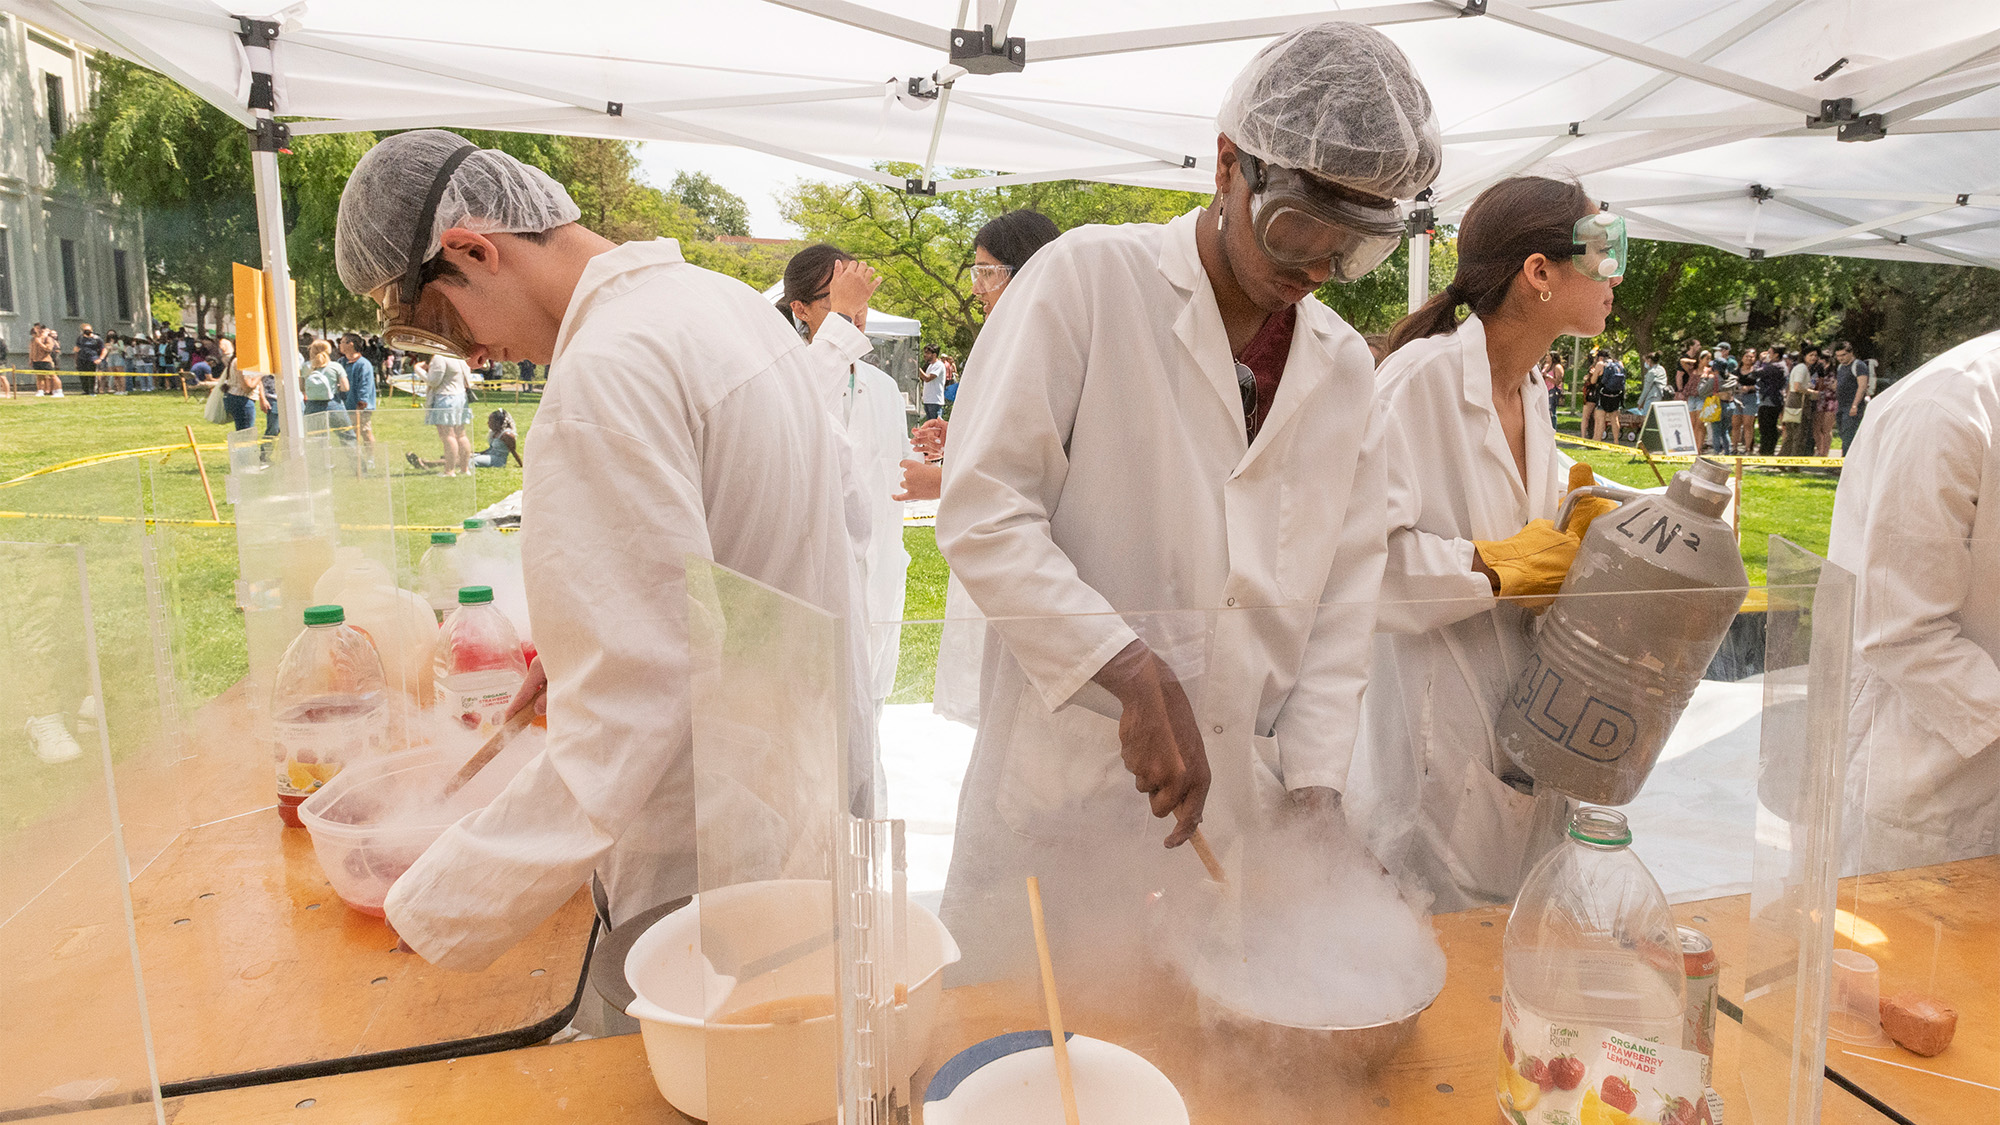 Students in lab coats make bowls of ice cream using liquid nitrogen.